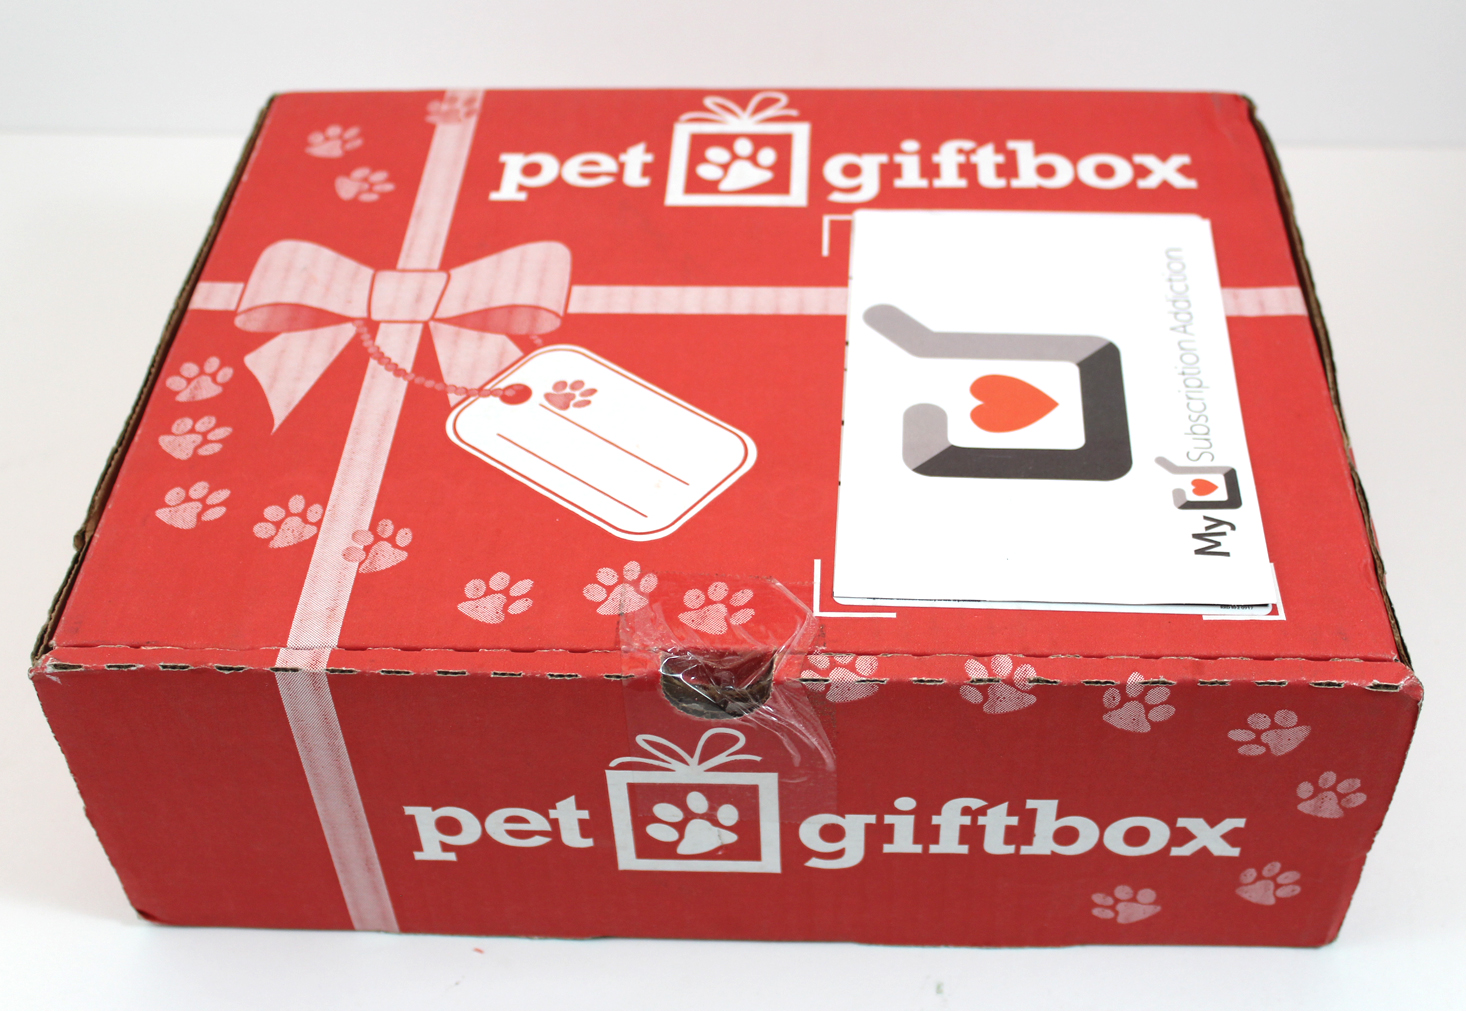 Pet GiftBox Cat Subscription Review + Coupon – November 2017